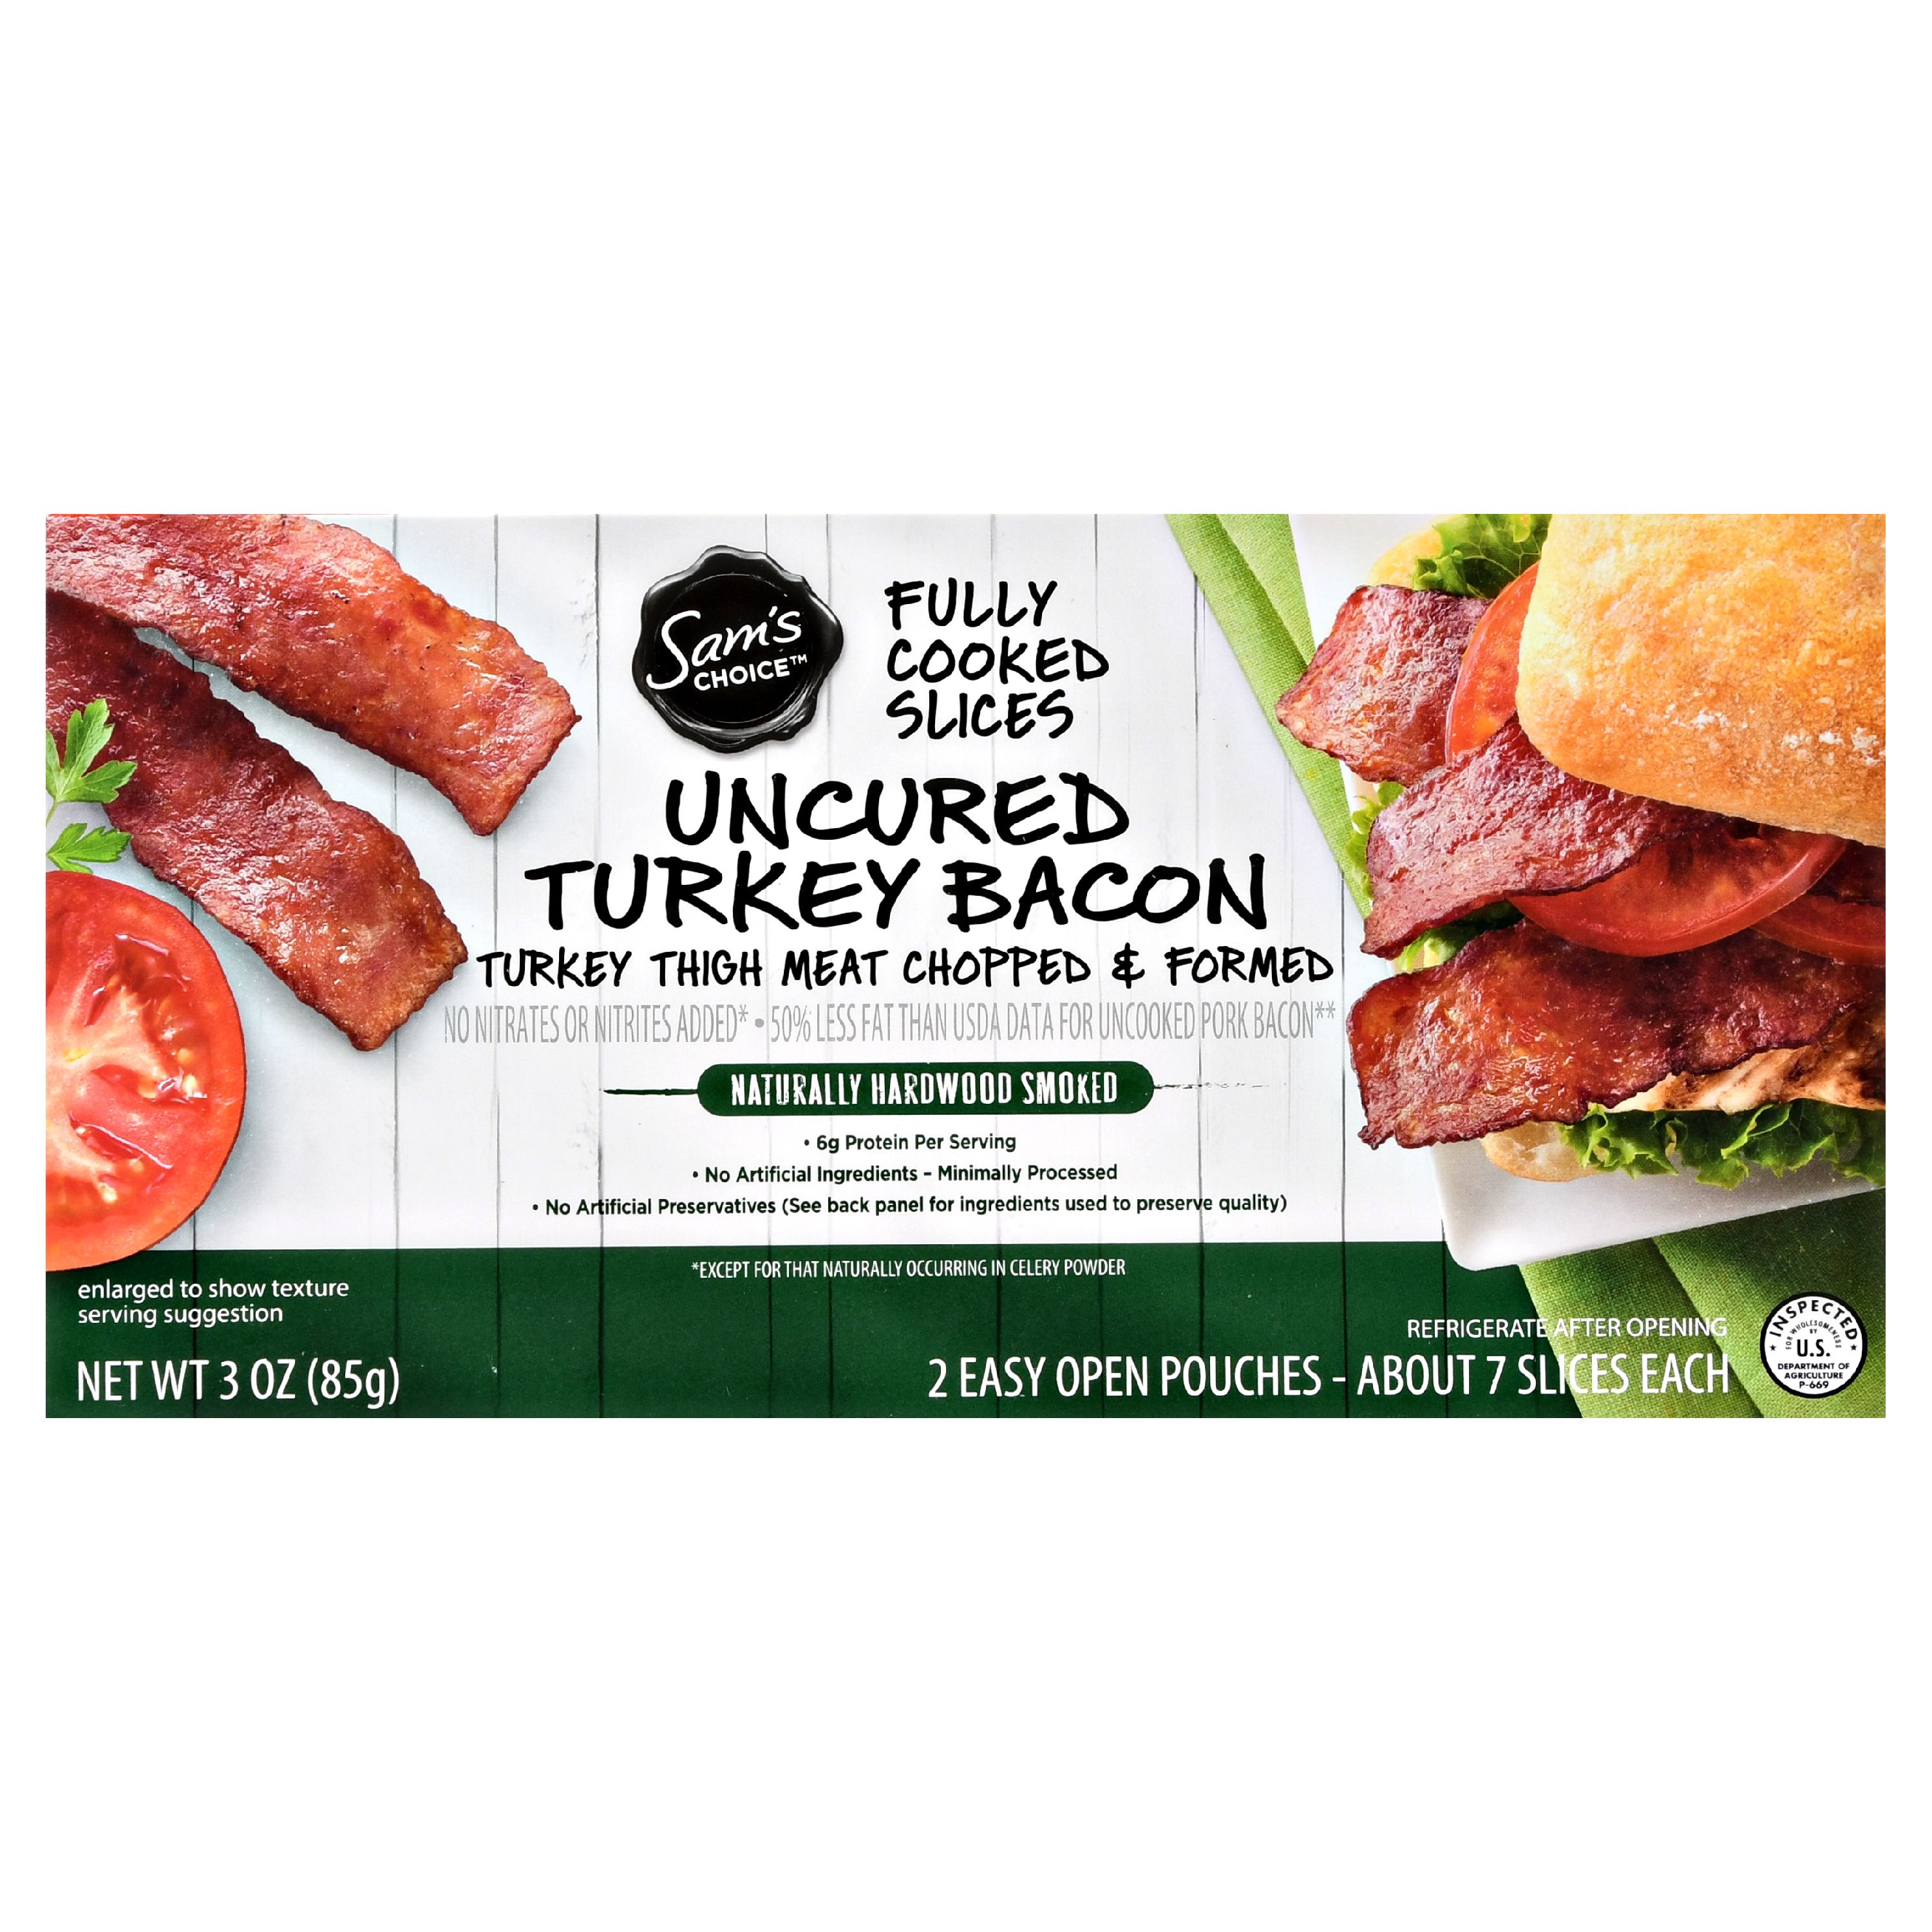 Sam's Choice Fully Cooked Uncured Turkey Bacon, 3 Oz. Image